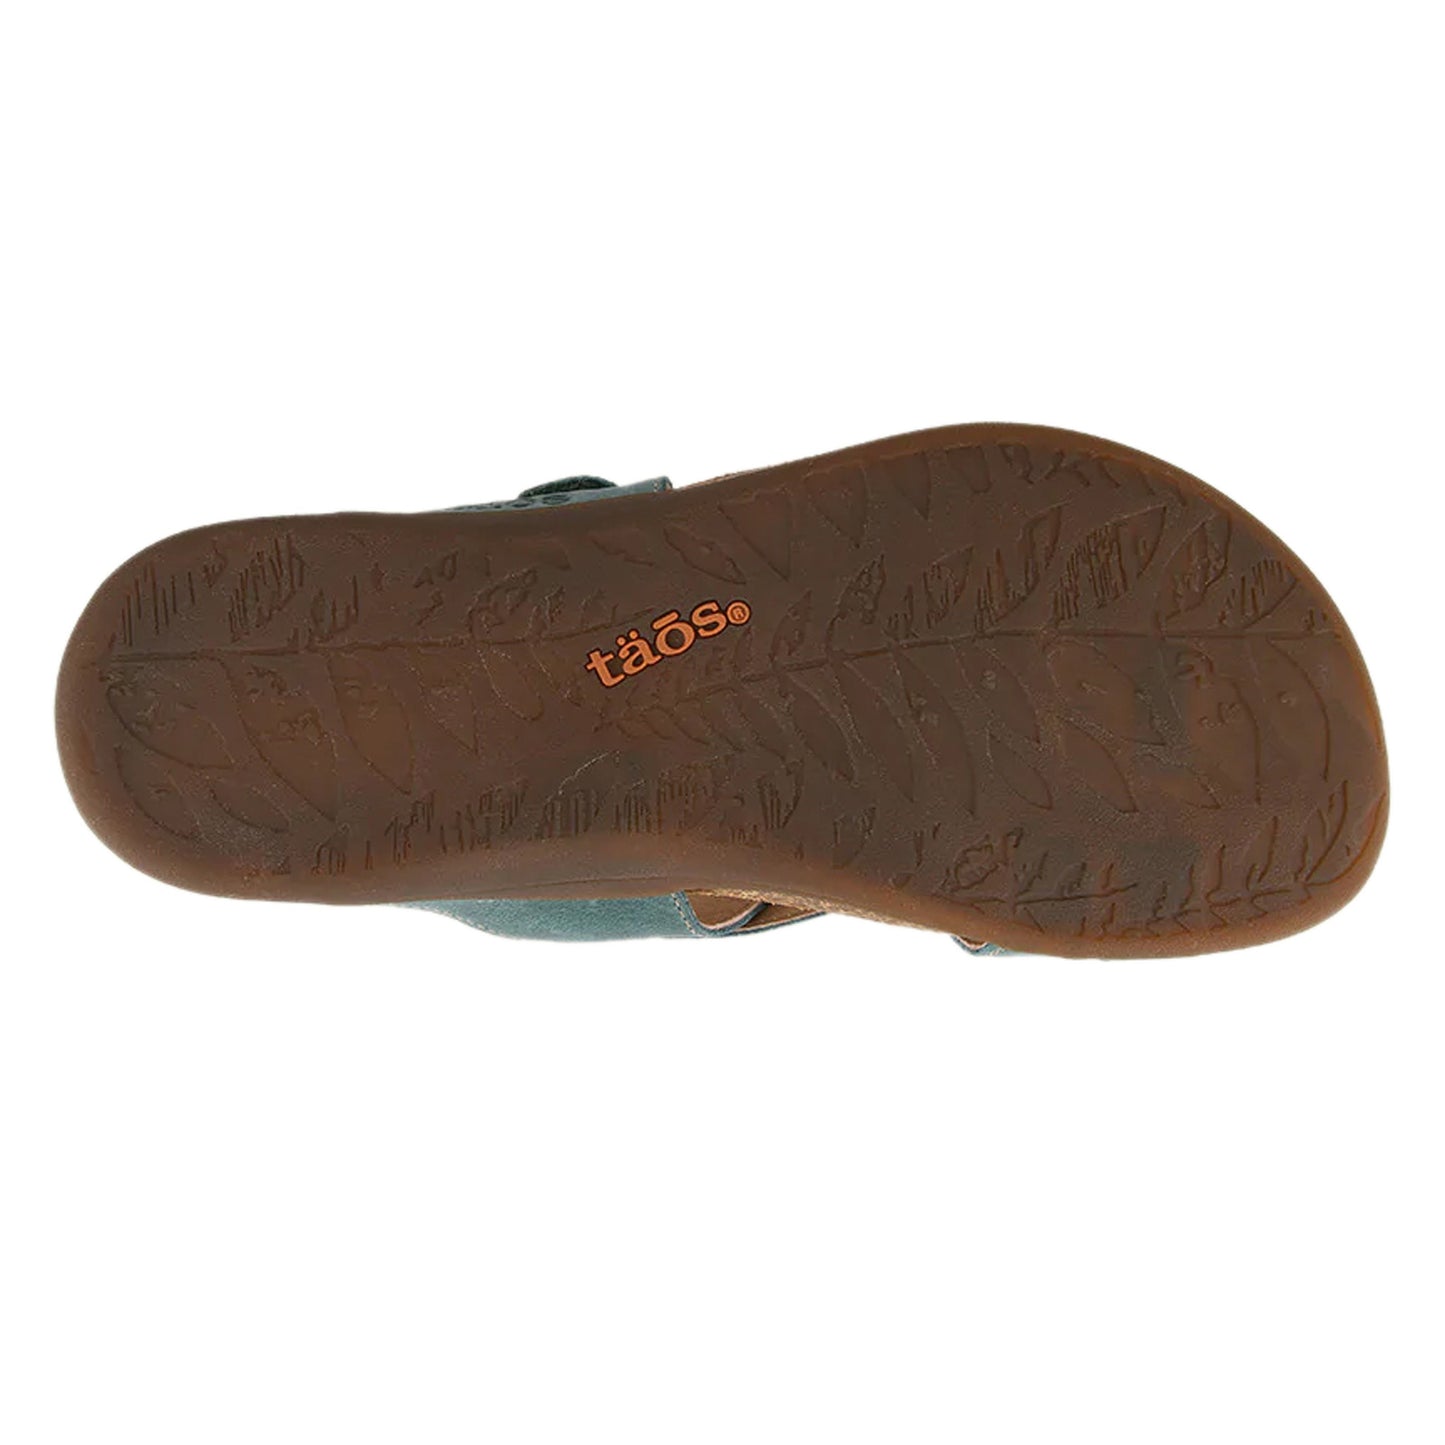 Peltz Shoes  Women's Taos Perfect Sandal Teal PRF-14050-TEAL